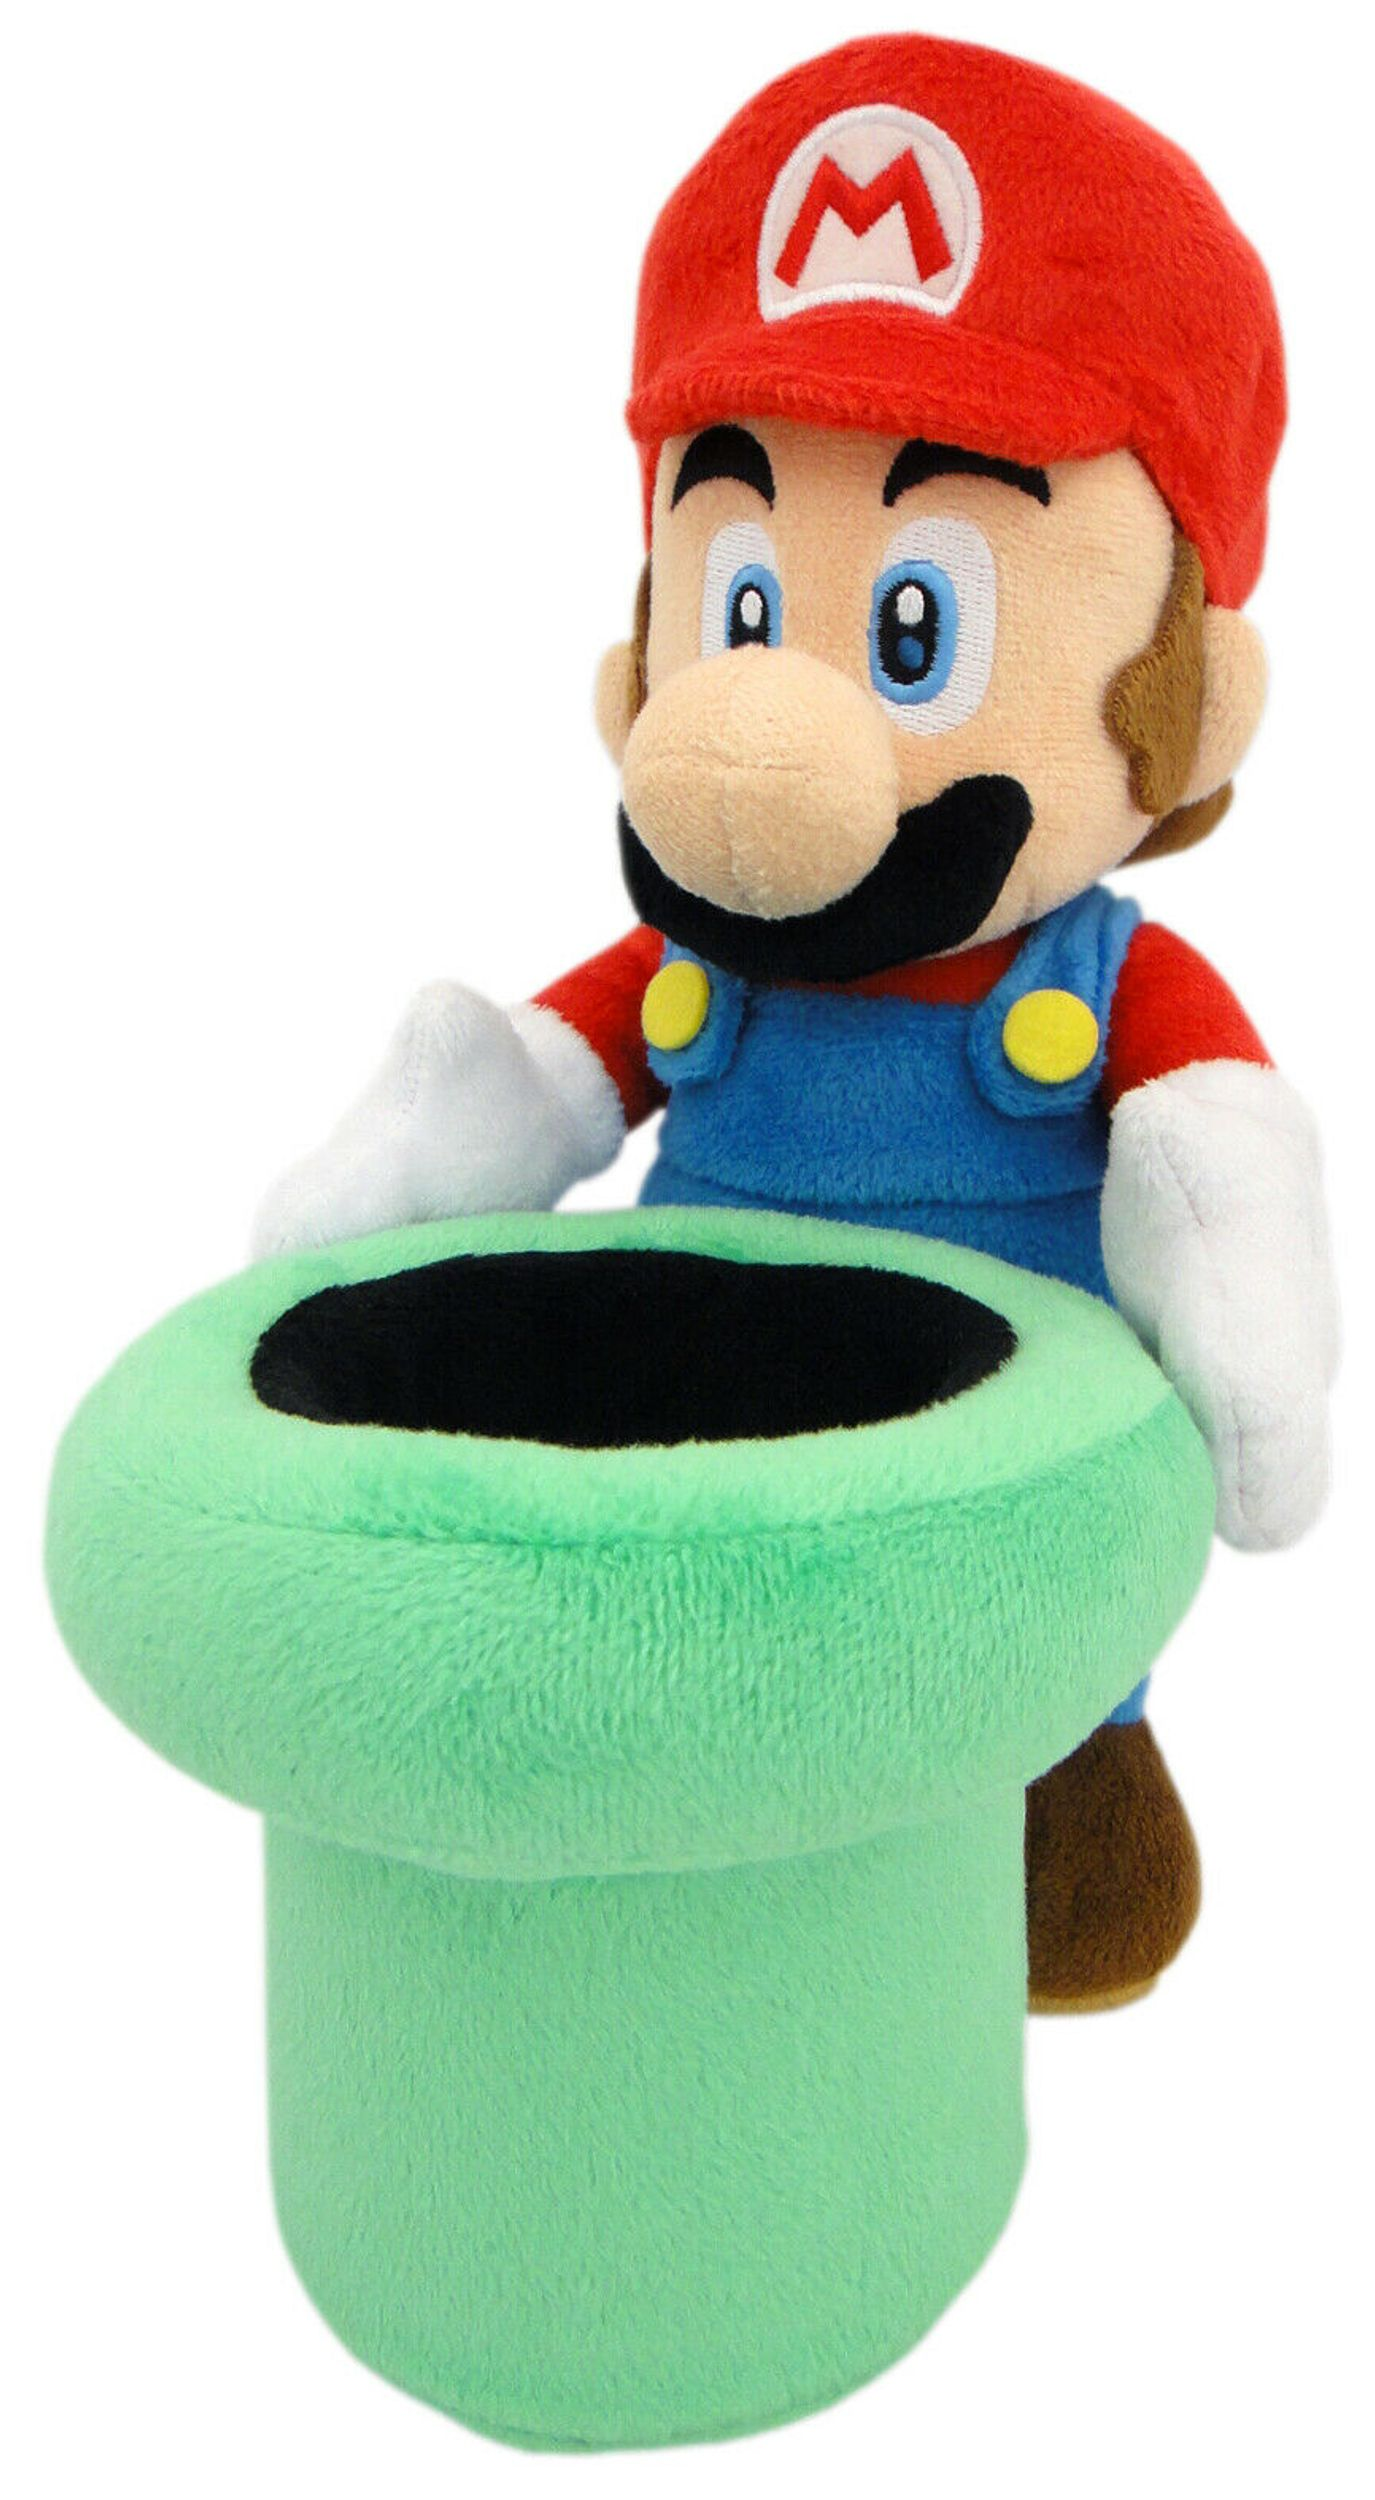 Plüschfigur NINTENDO Mario Super